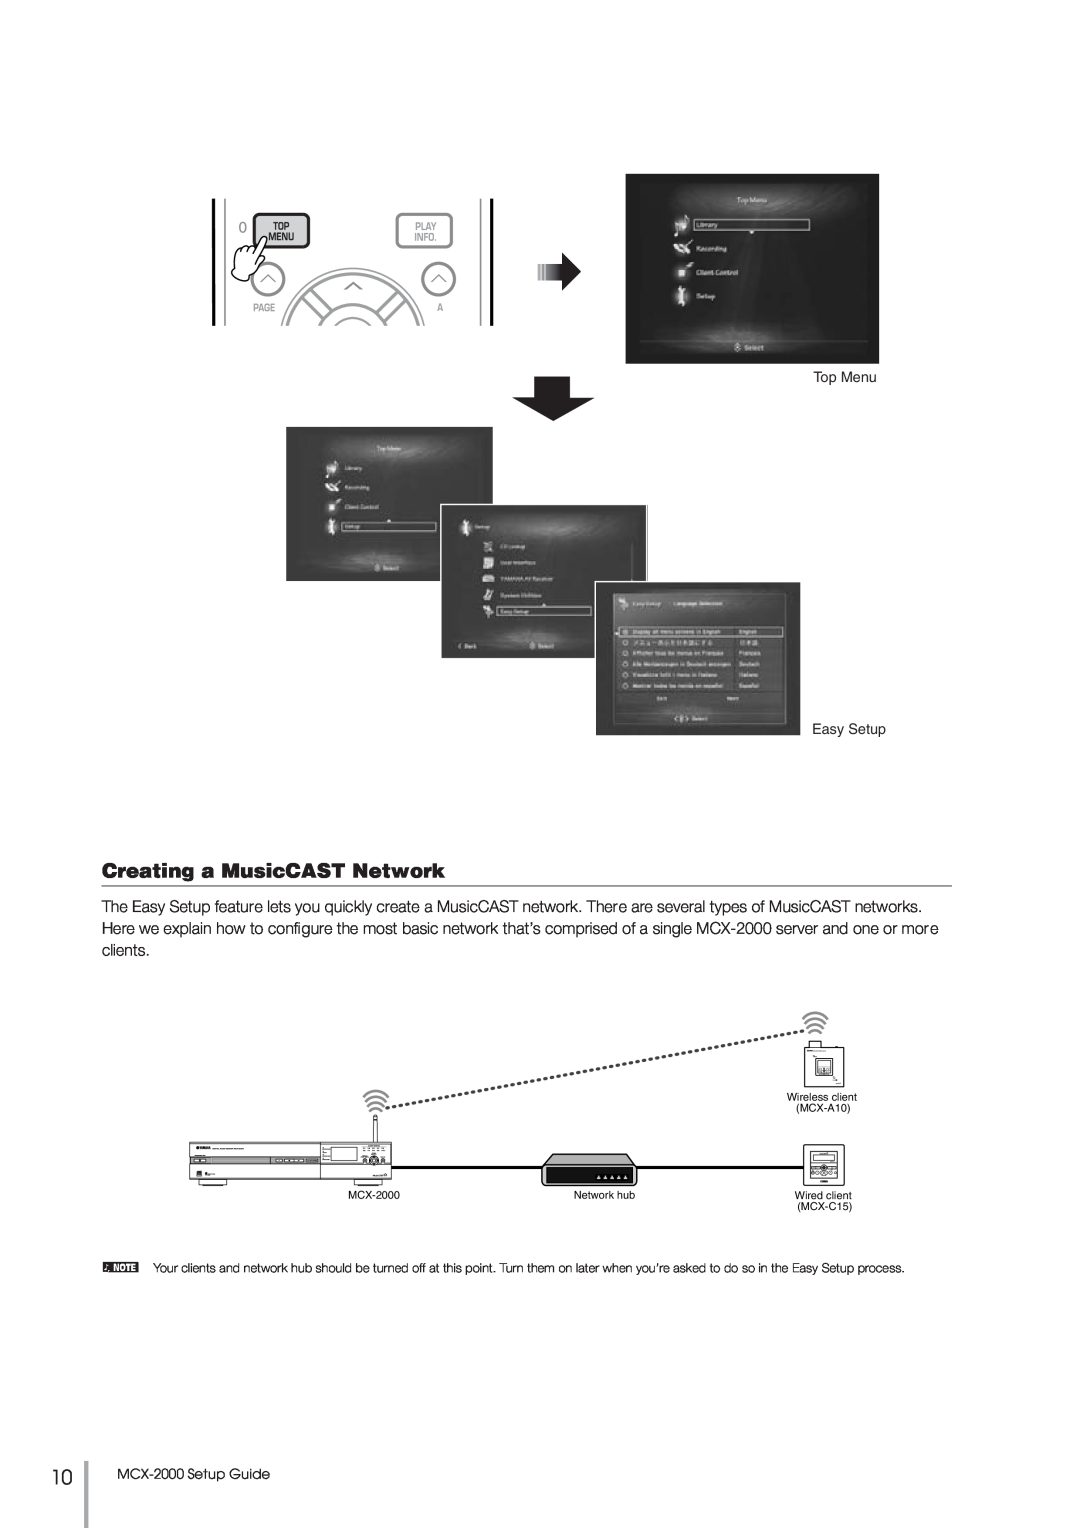 Yamaha MCX-2000 setup guide Creating a MusicCAST Network, Top Menu Easy Setup 